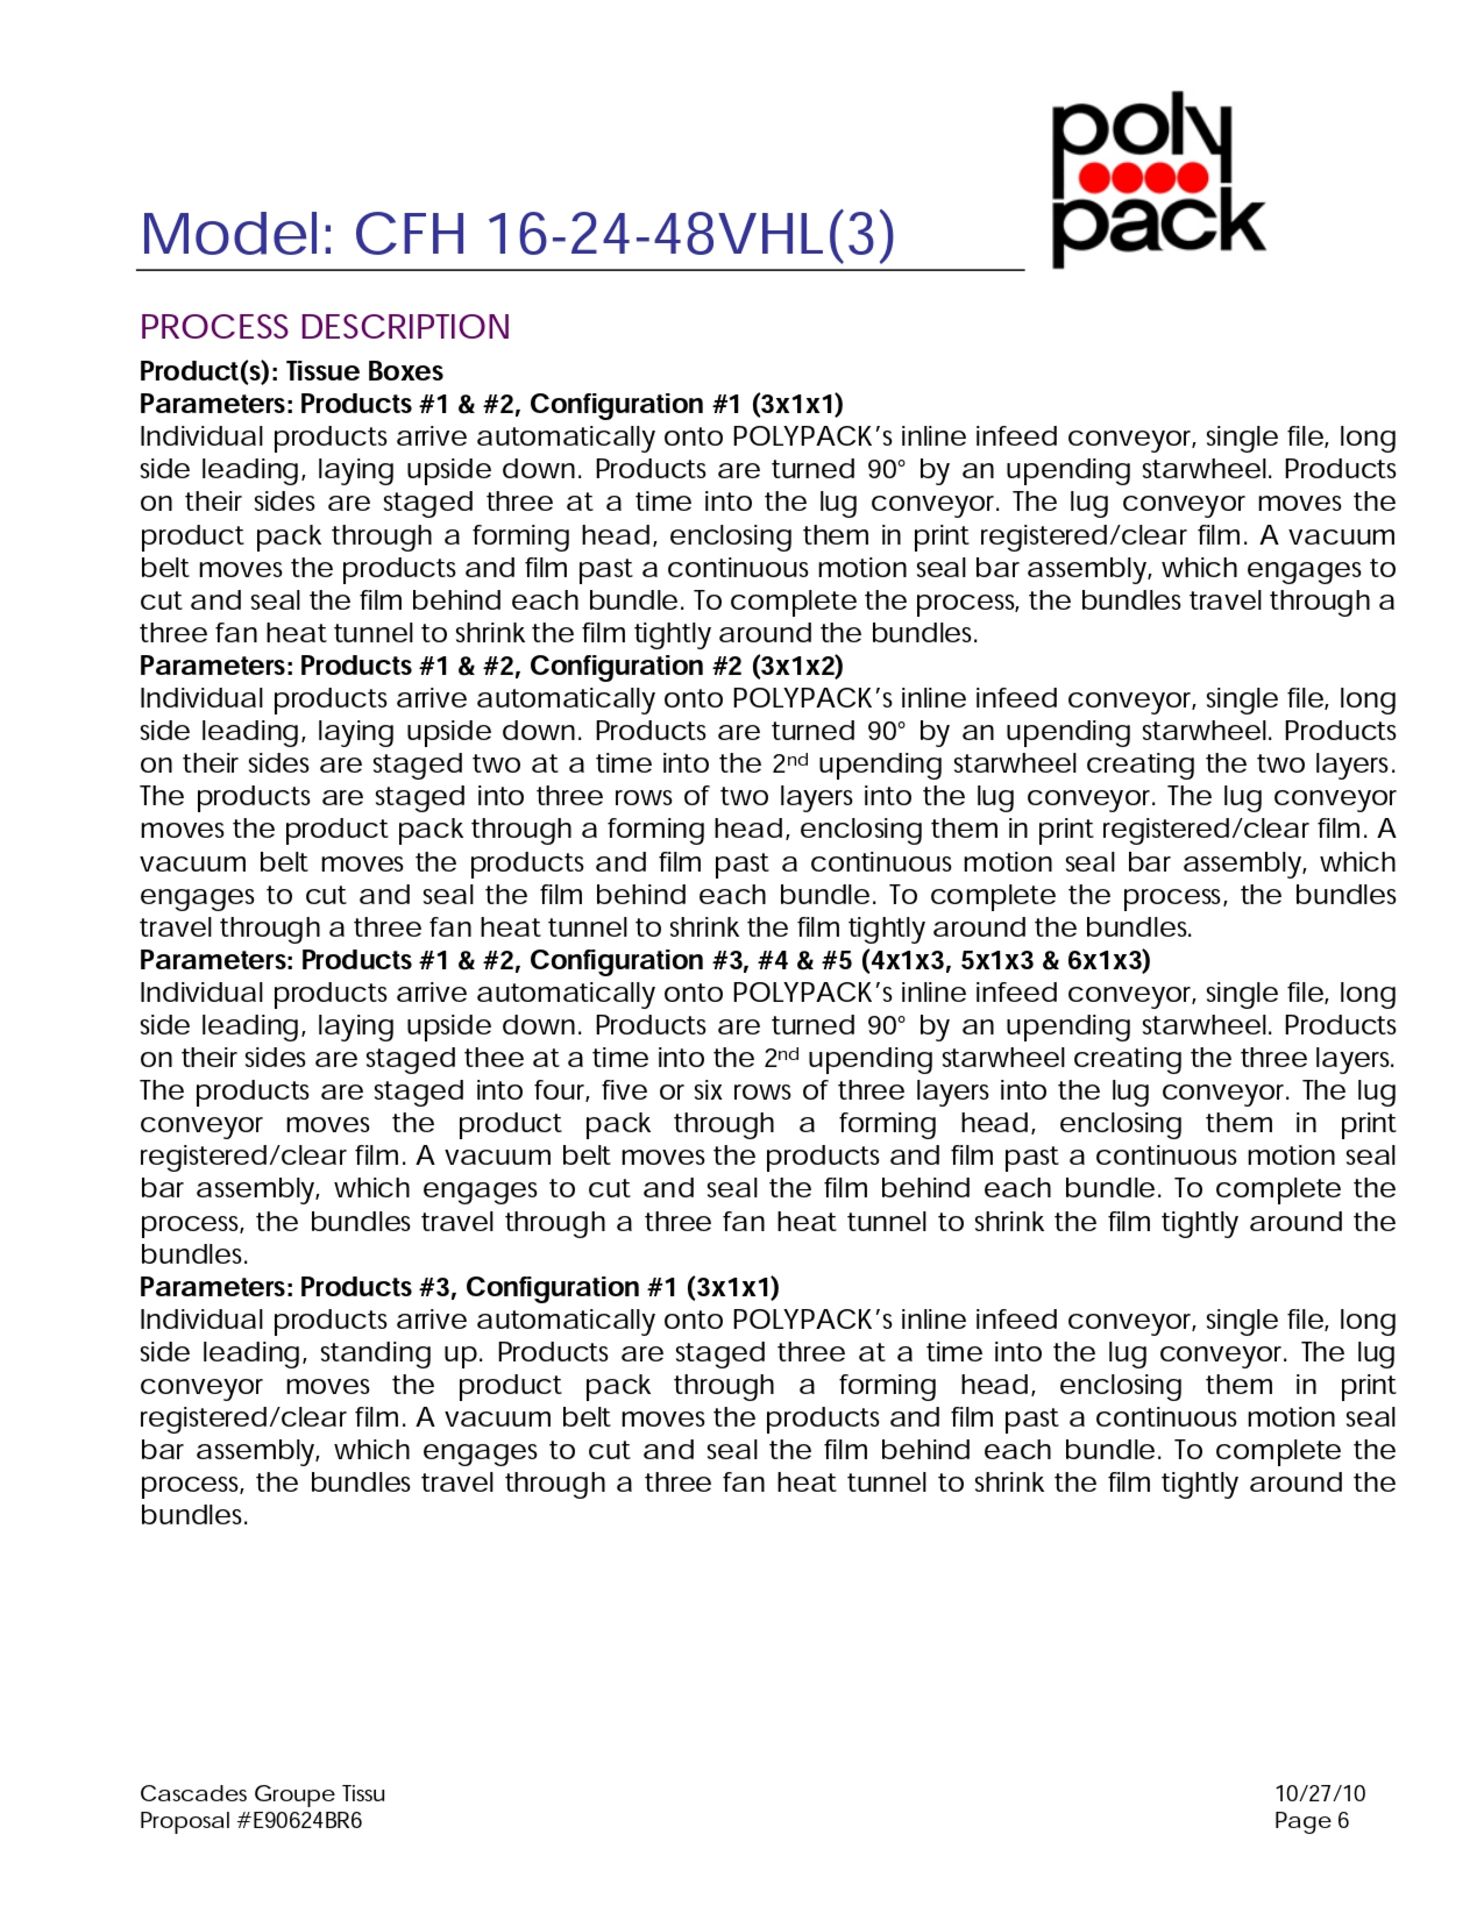 2010 SHRINK WRAPPER FULLY AUTOMATIC, BRAND: POLY PACK, MODEL CFH 16-24-48VHL(3), 600V, 40AMP, - Image 18 of 29